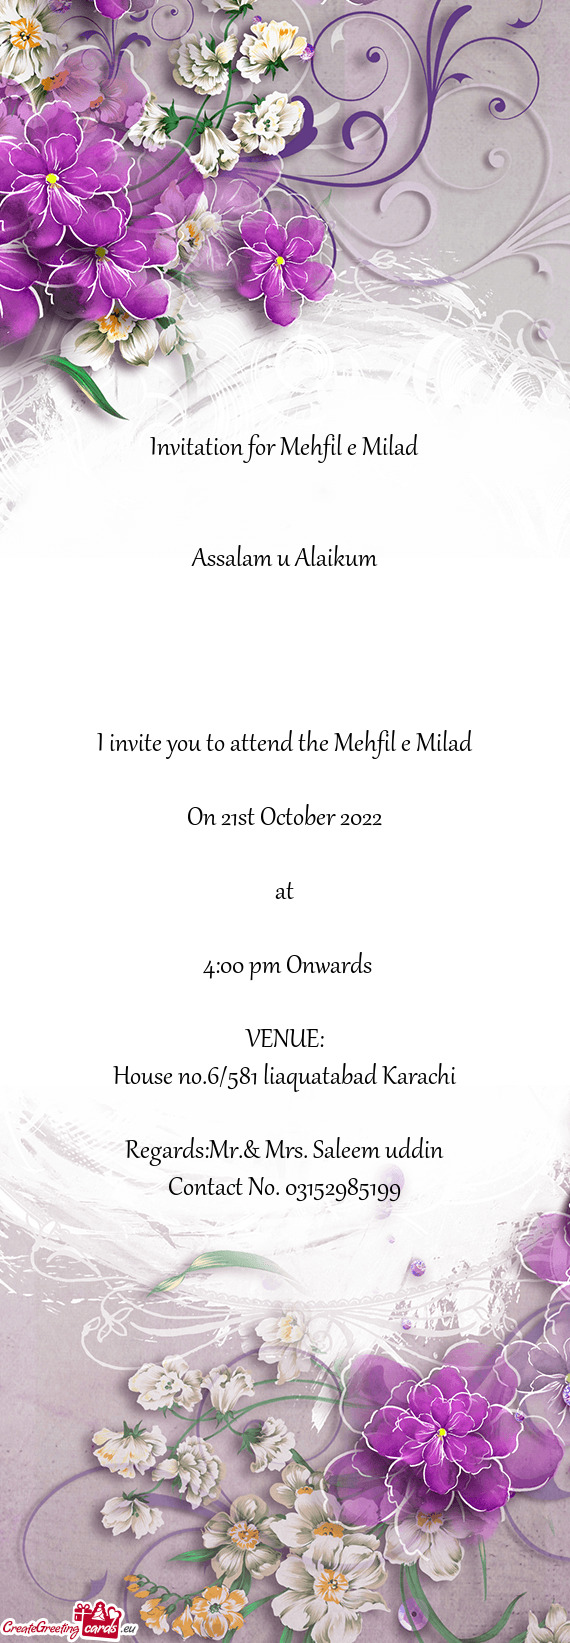 Invitation for Mehfil e Milad